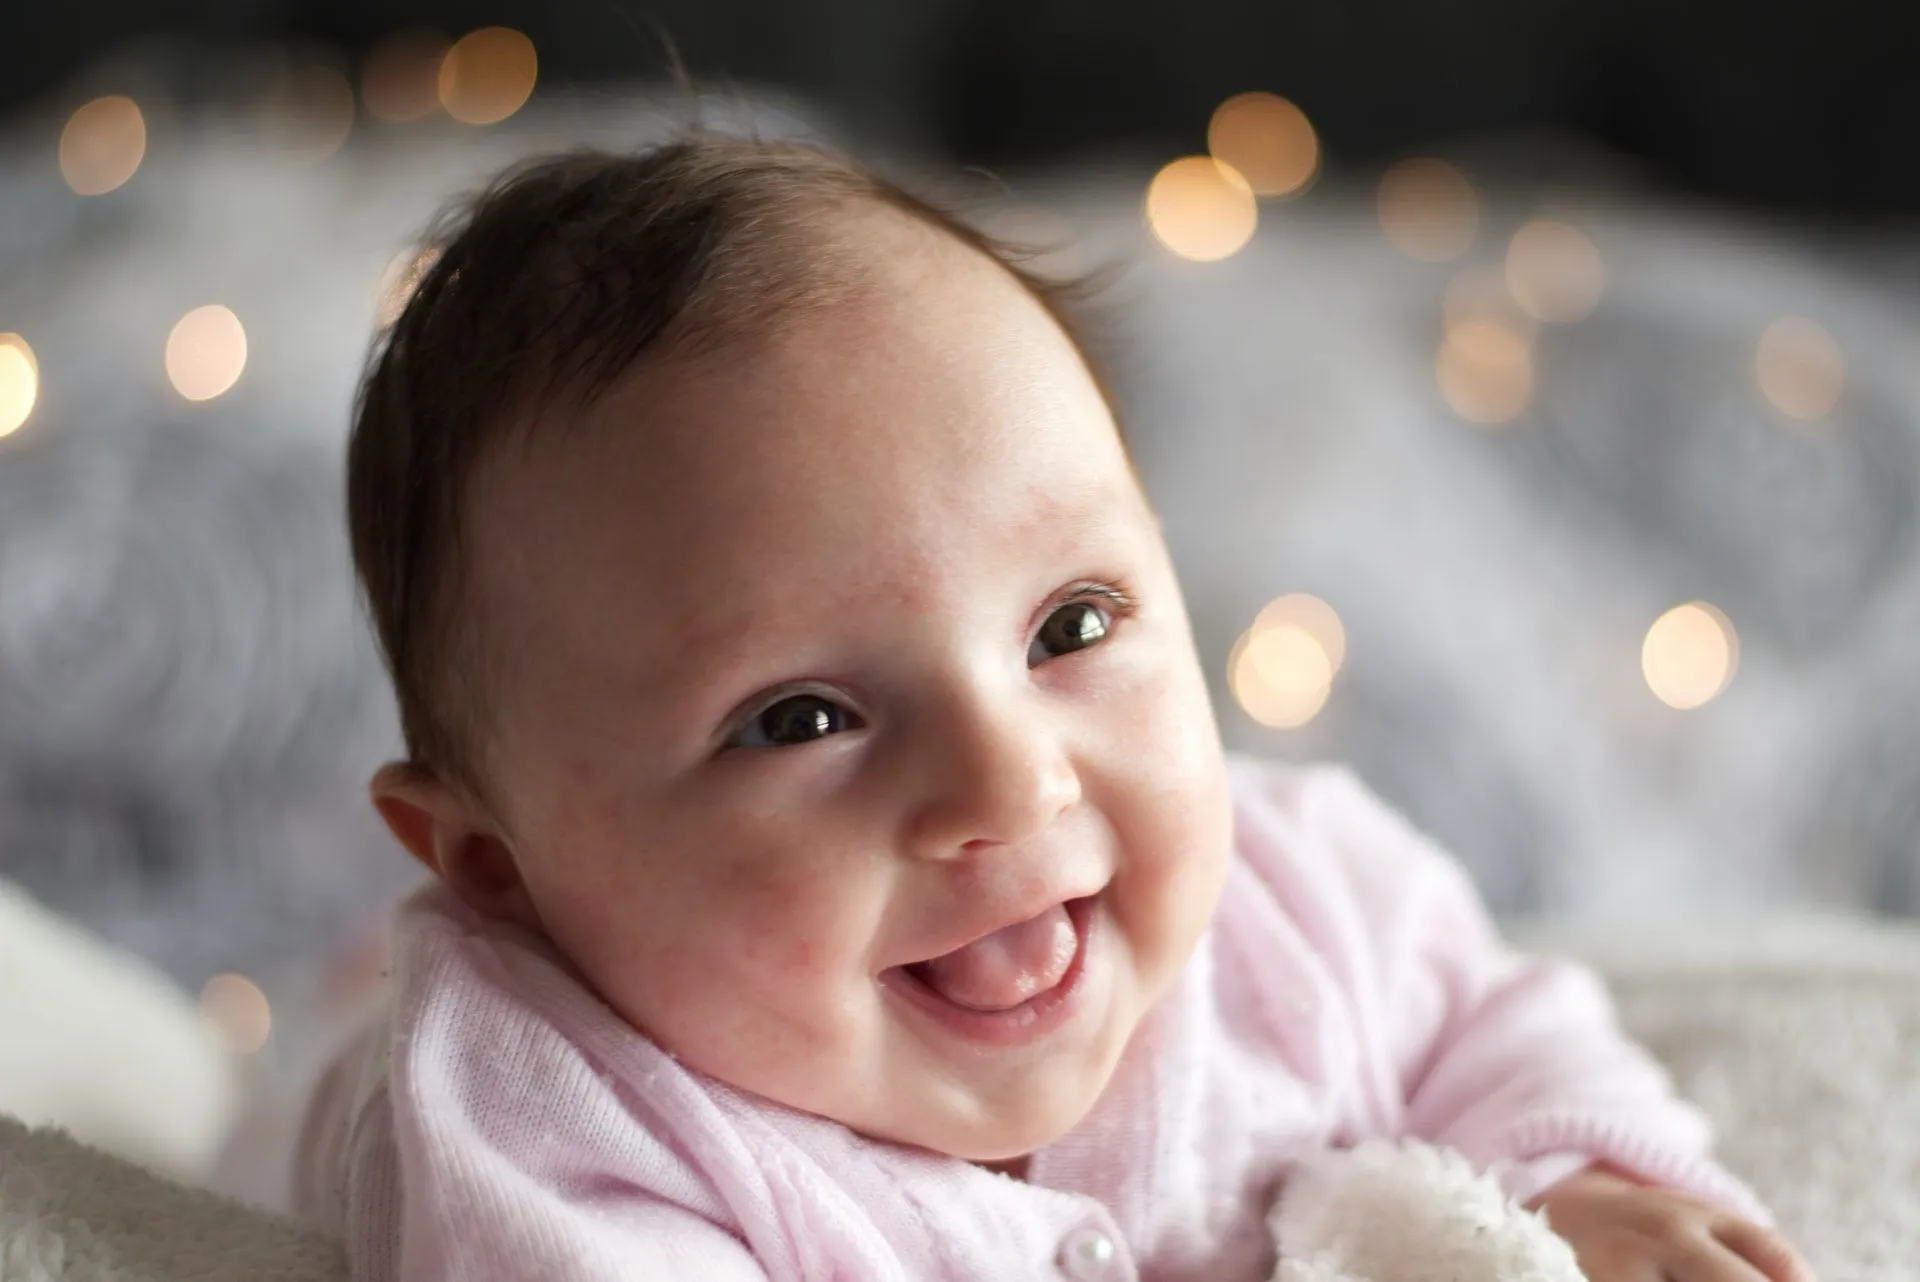 A newborn baby girl laughing